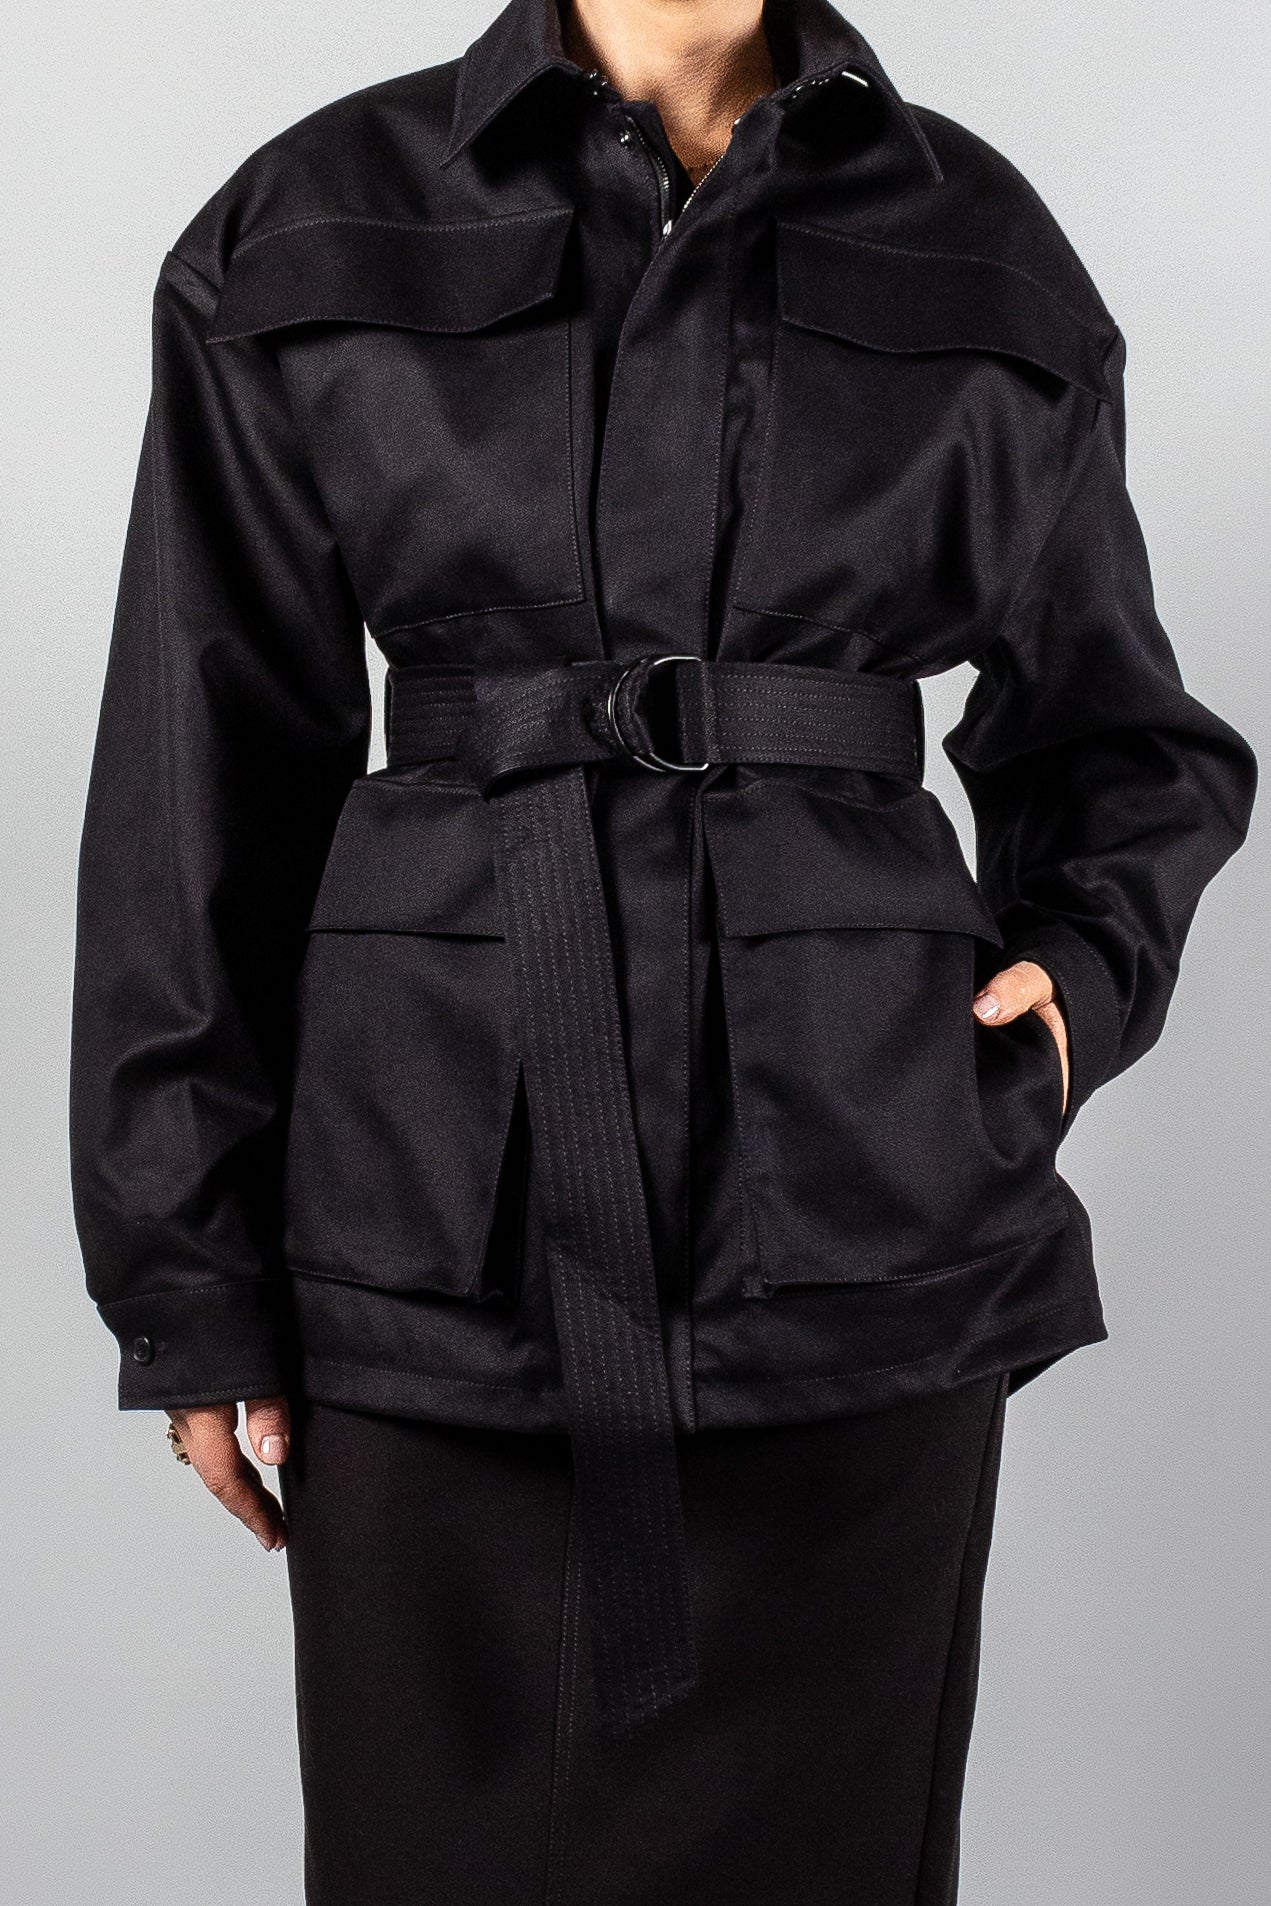 Wardrobe NYC Drill Parka-Jackets and Blazers-Misch-Boutique-Vancouver-Canada-misch.ca